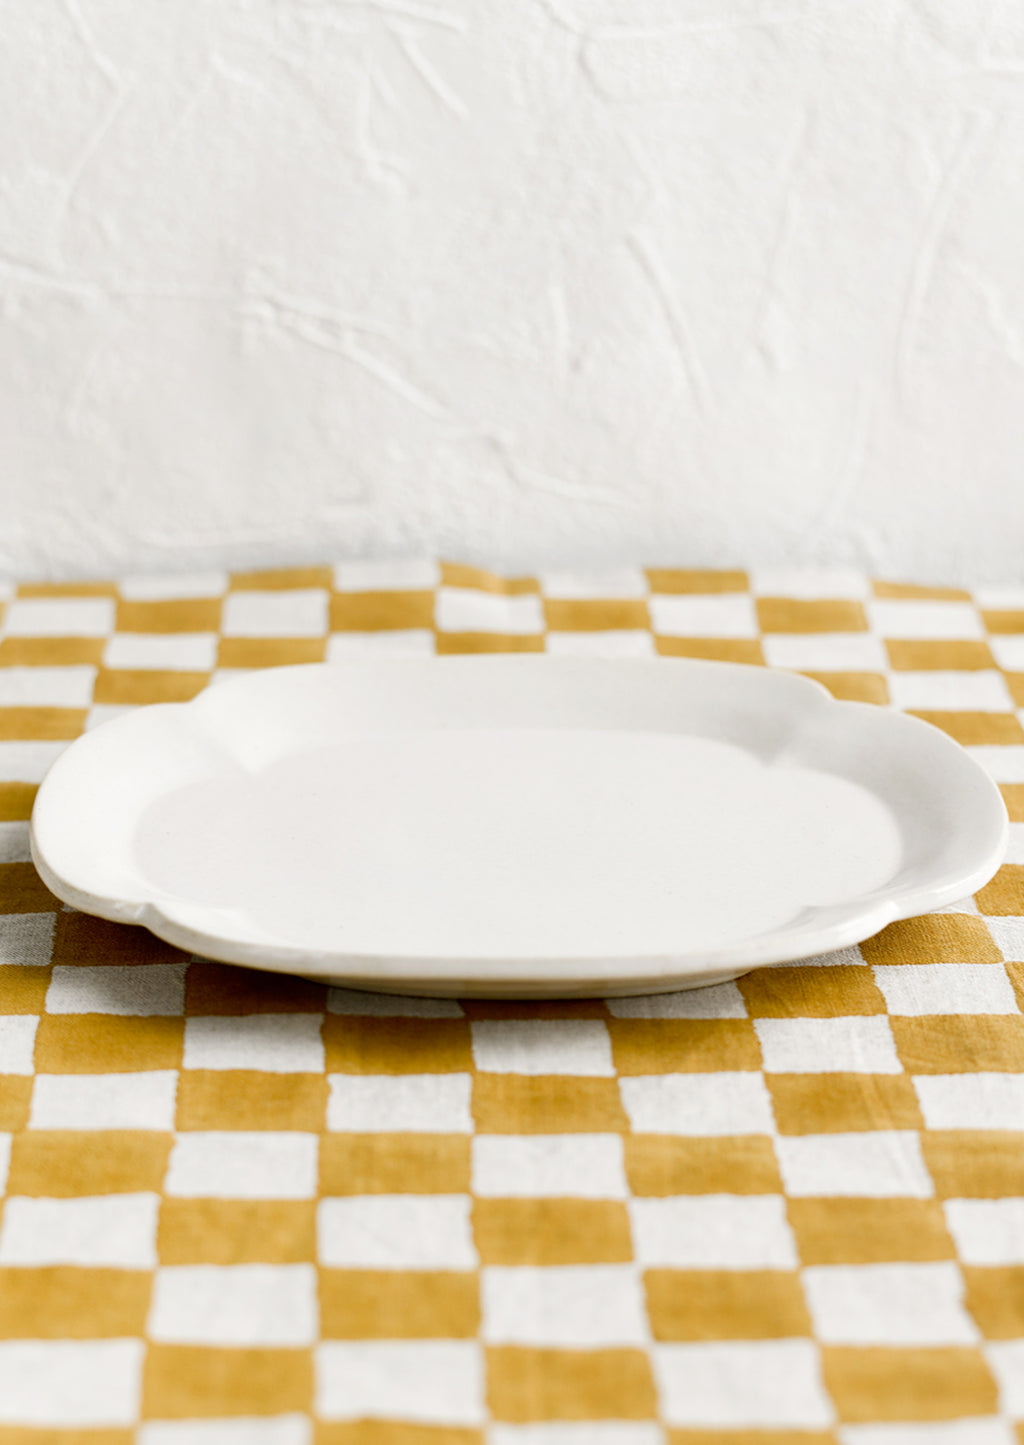 2: A quatrefoil shaped white ceramic platter/plate.